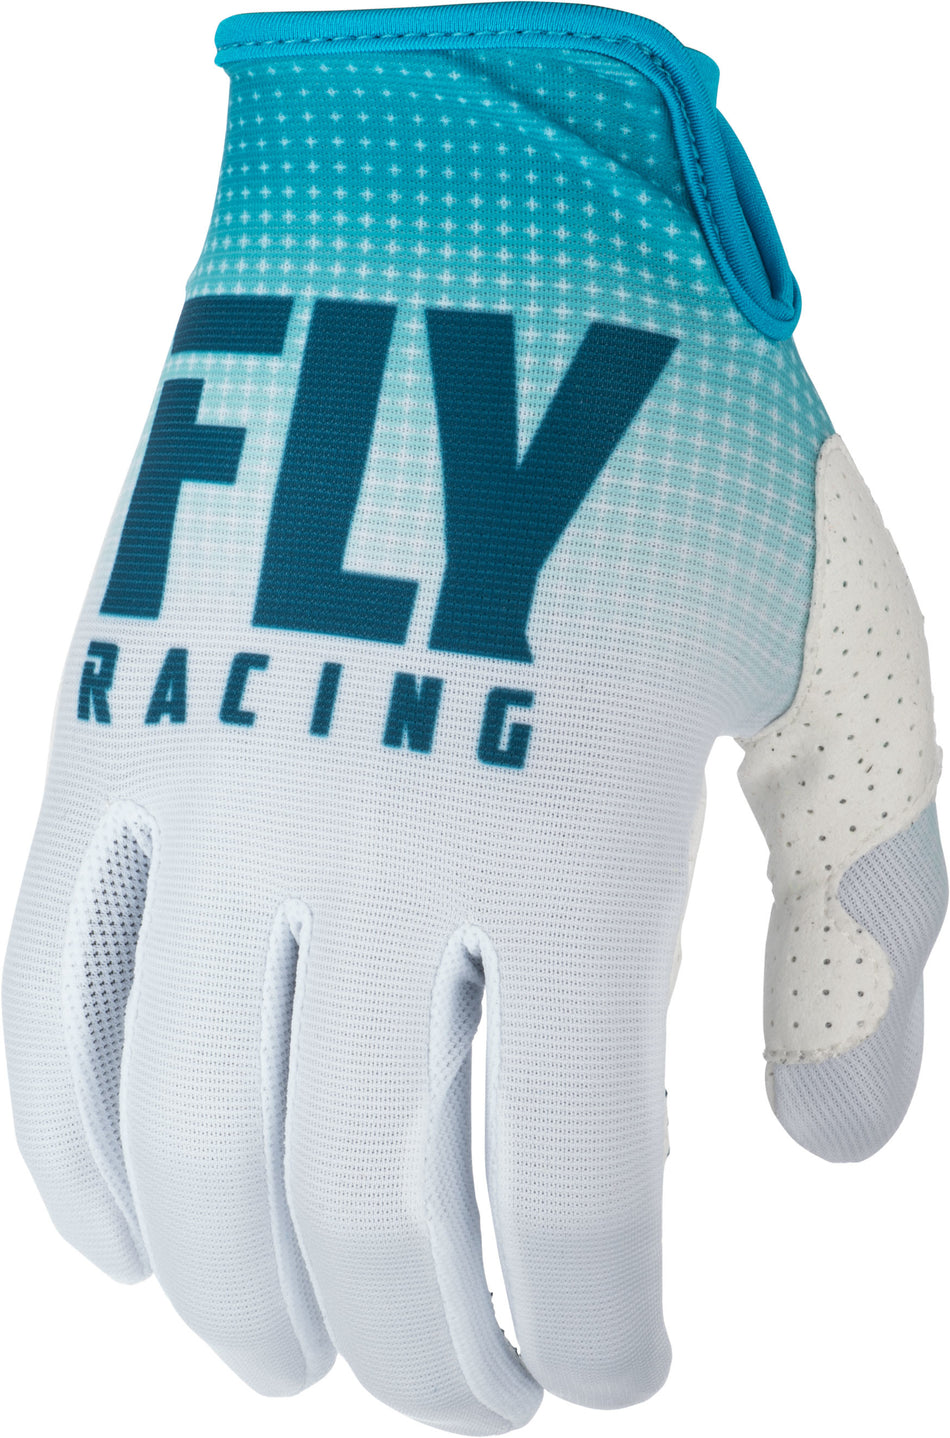 FLY RACING Lite Gloves Blue/White Sz 12 372-01112